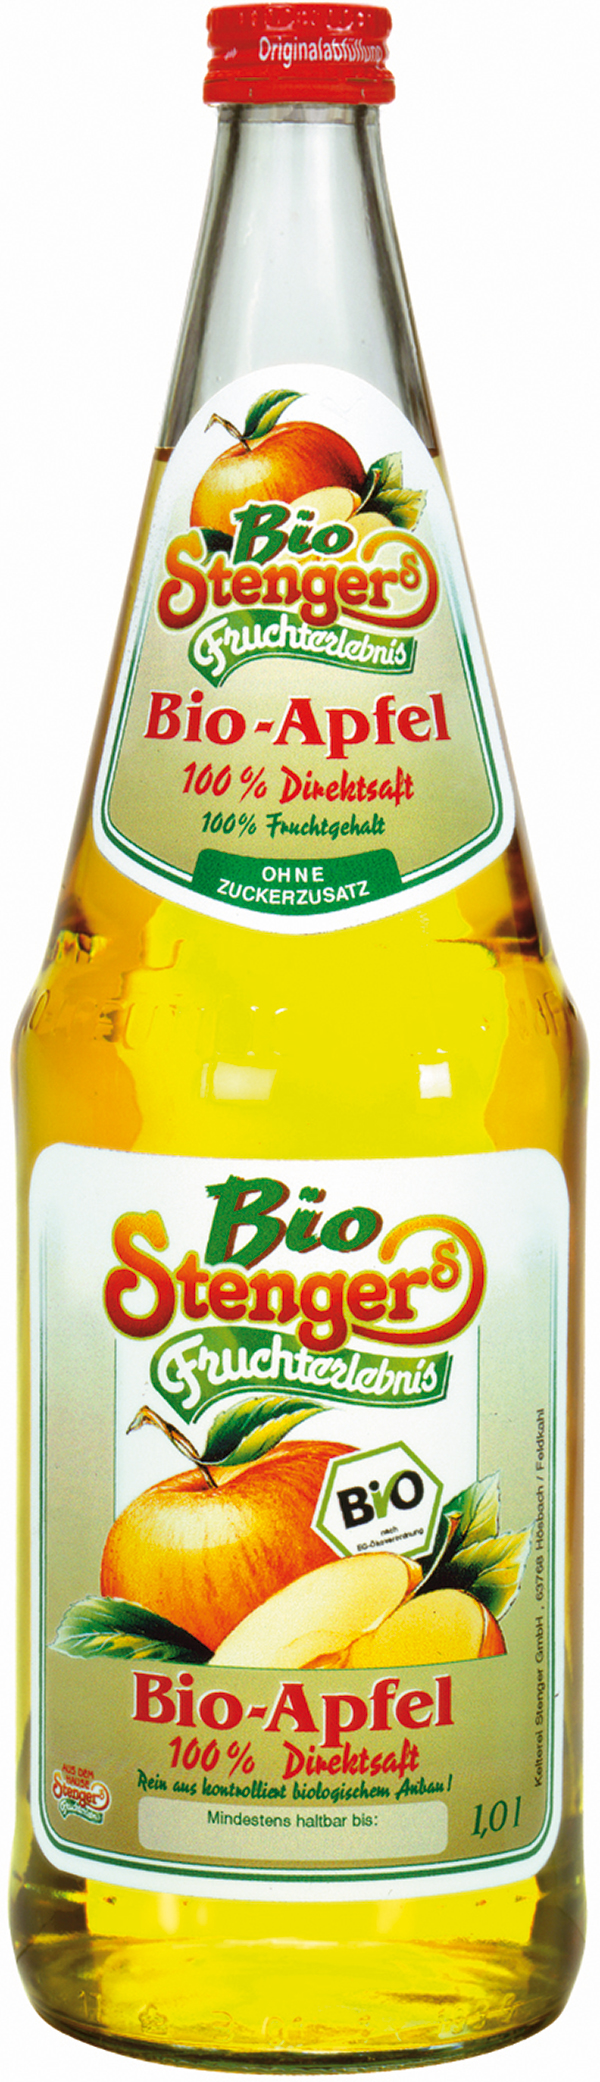 Stenger Bio Apfelsaft Direktsaft trüb  6 x 1,0 l (Glas)